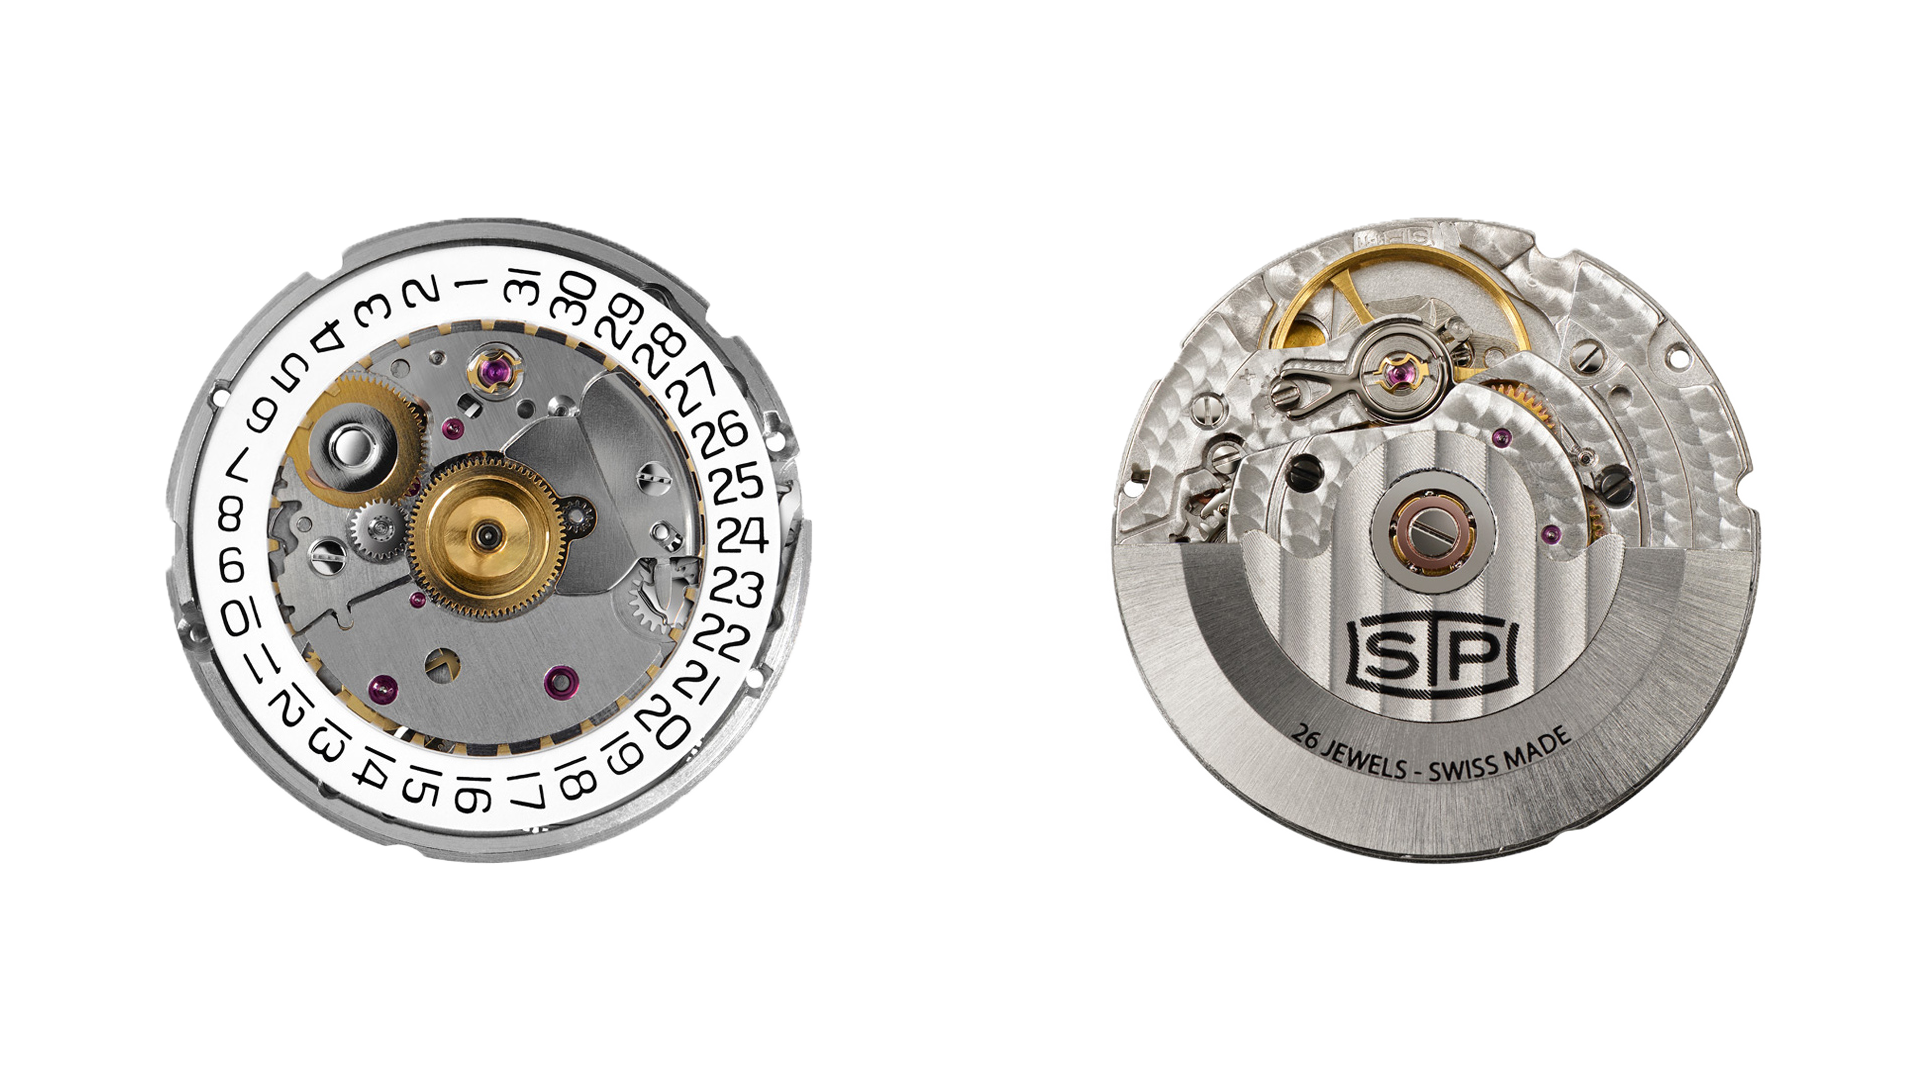 STP1-11 26 jewels Swiss watch movement details